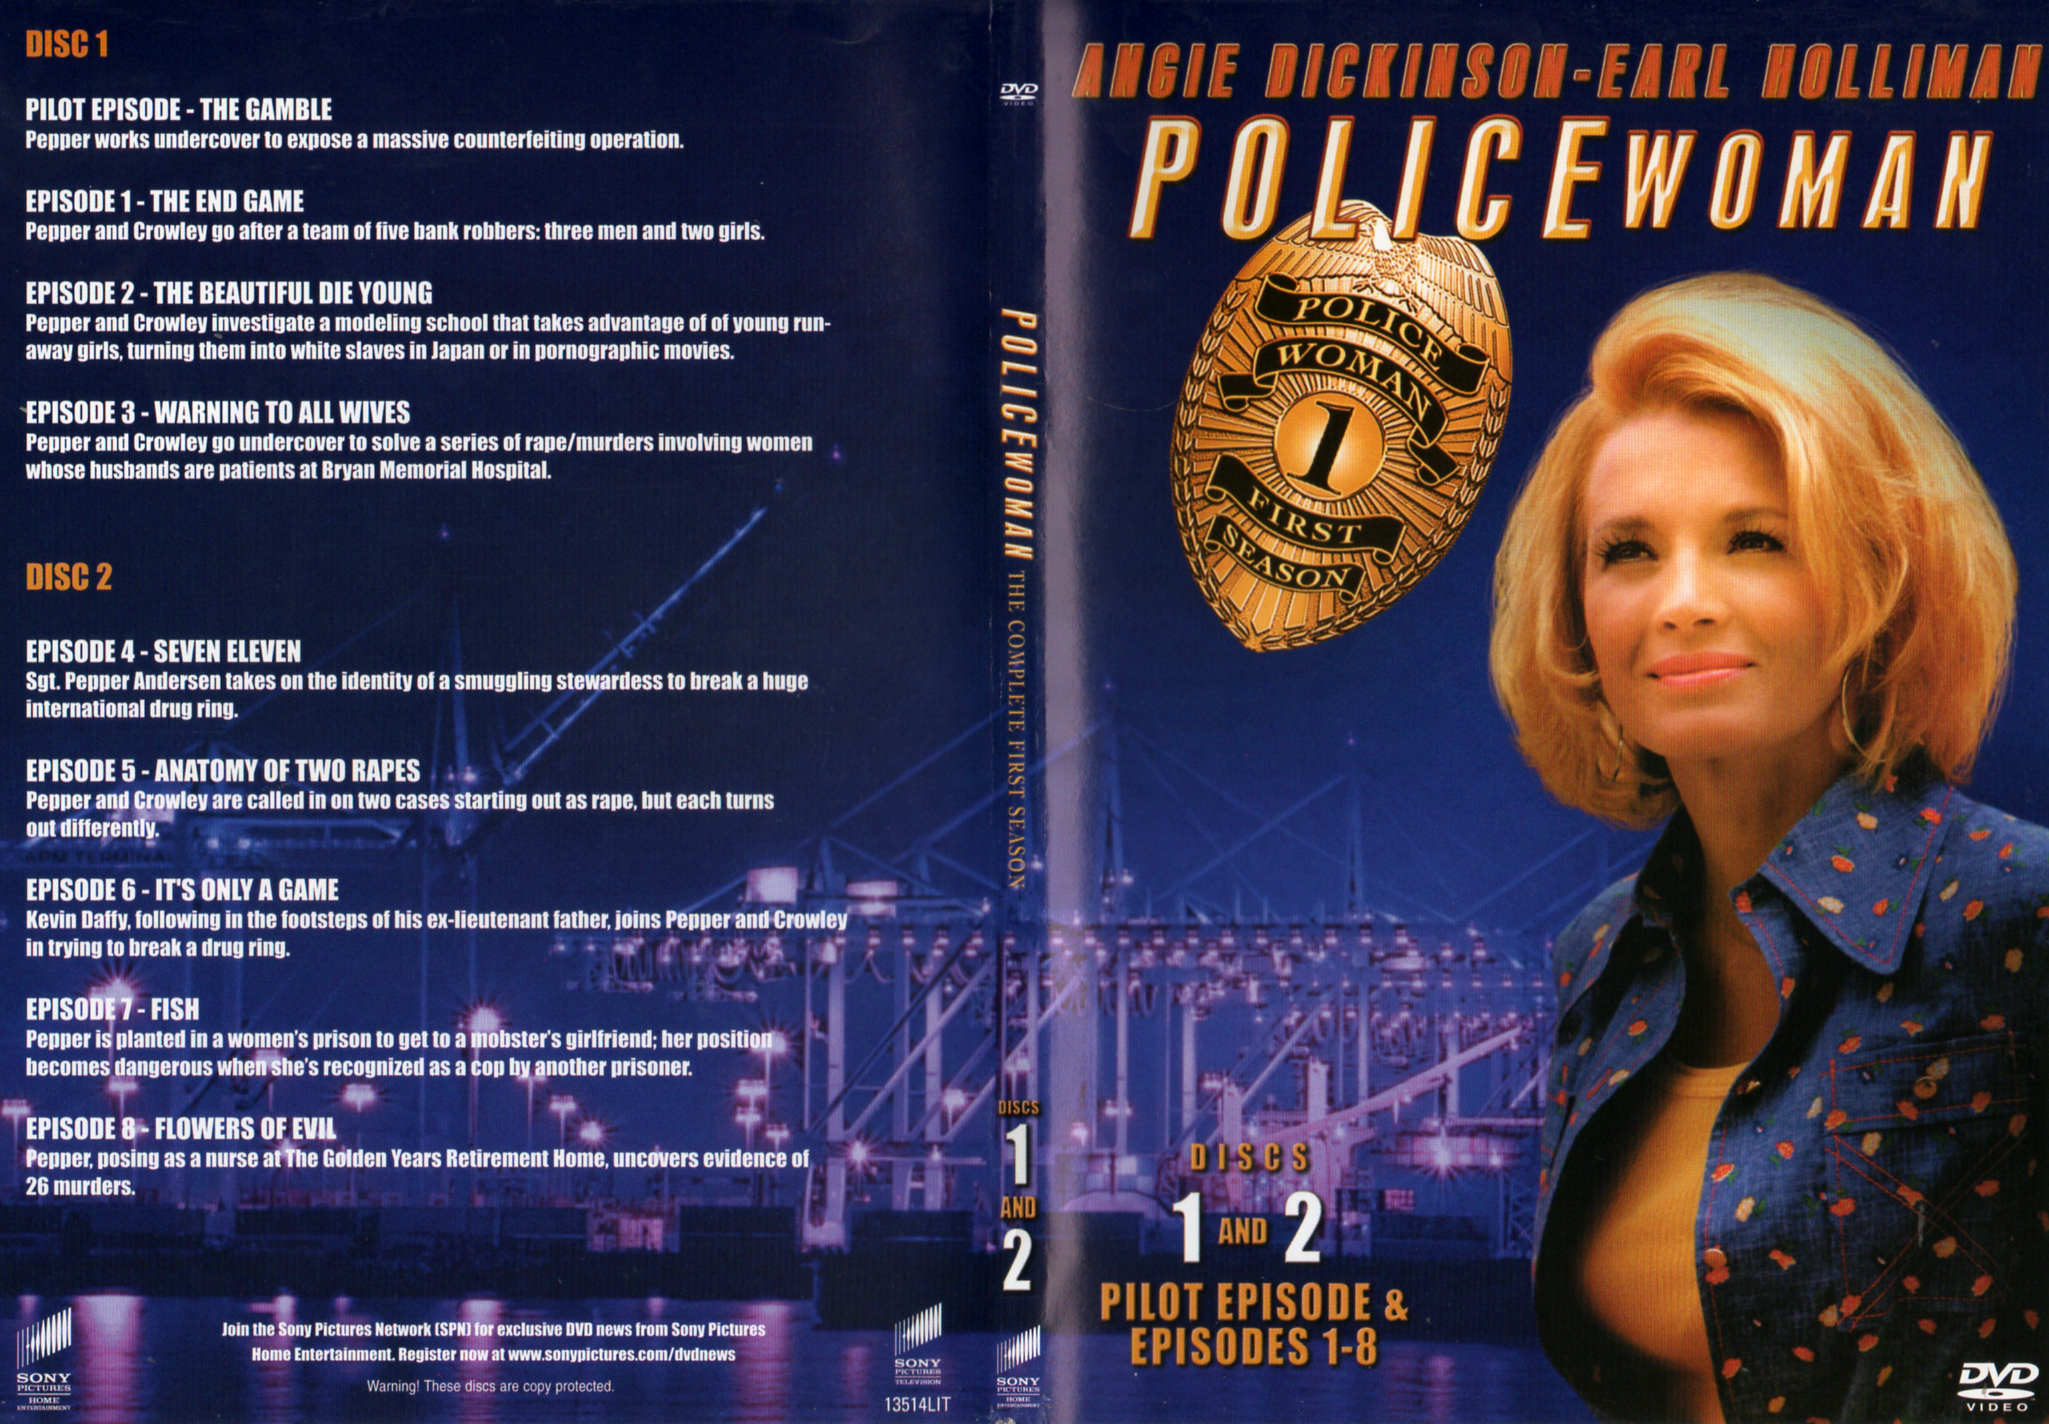 Jaquette DVD Police Woman Saison 1 DVD 1 Zone 1